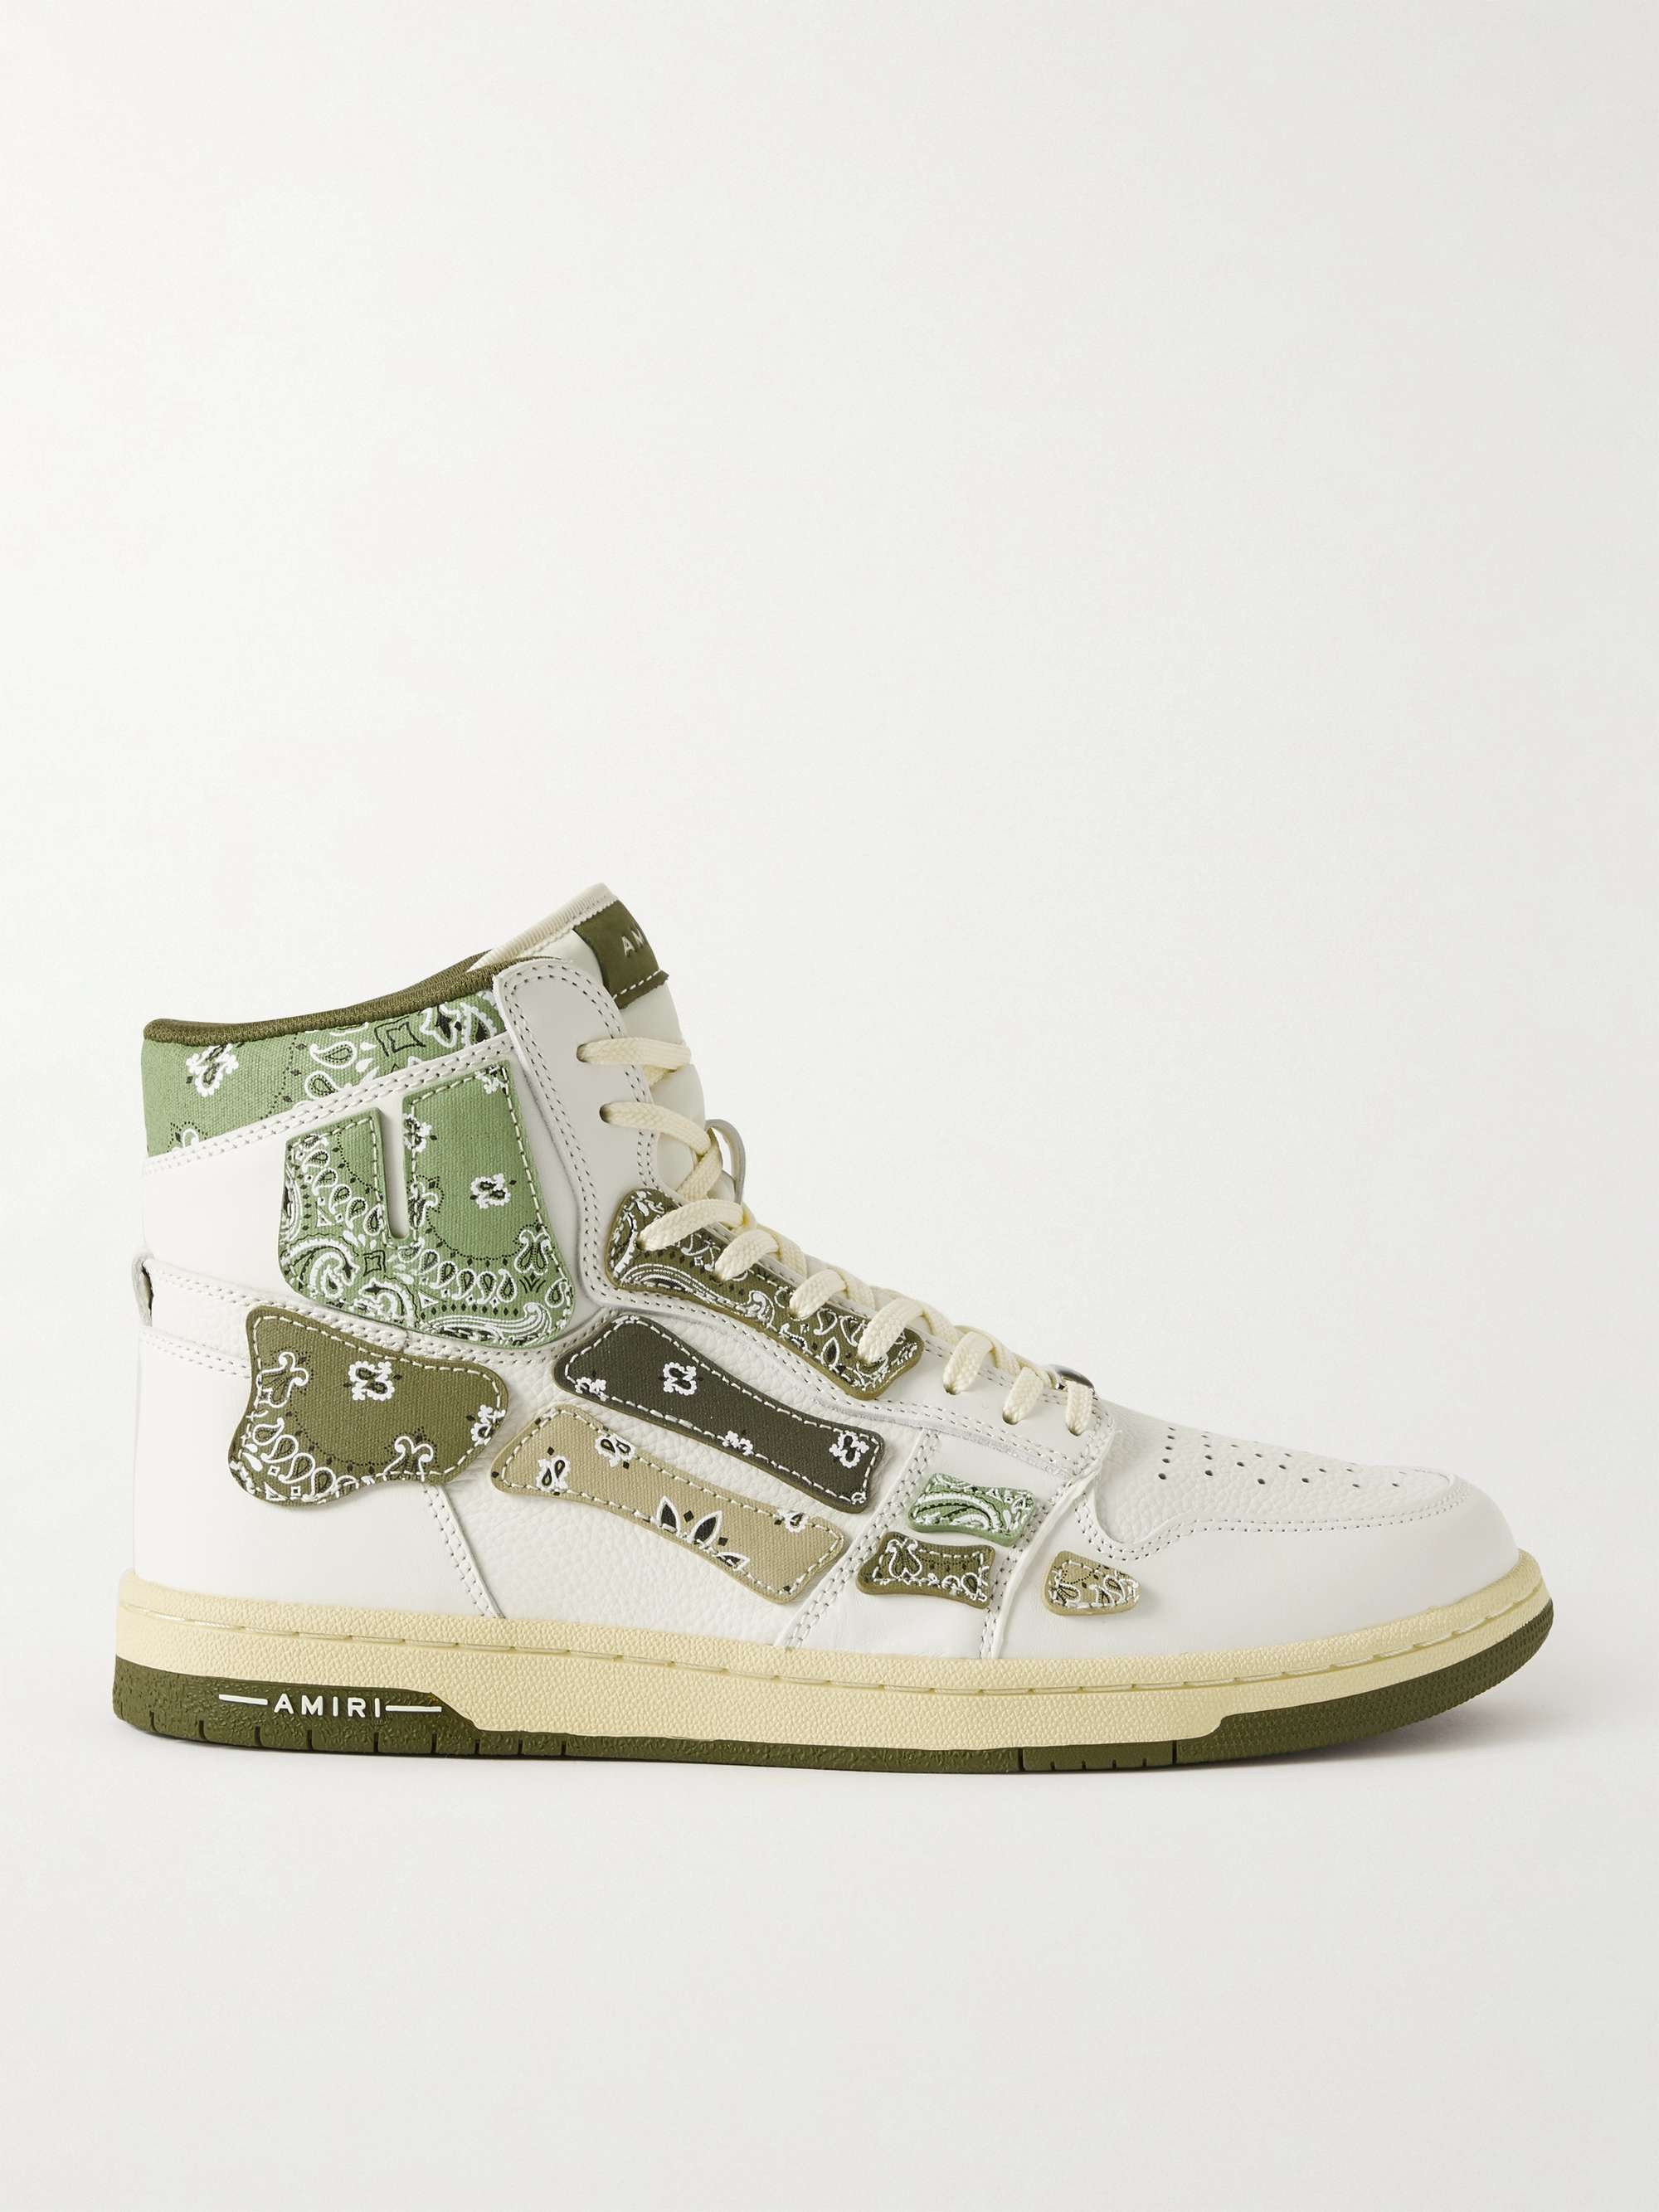 AMIRI Skel-Top Bandana-Print Leather High-Top Sneakers